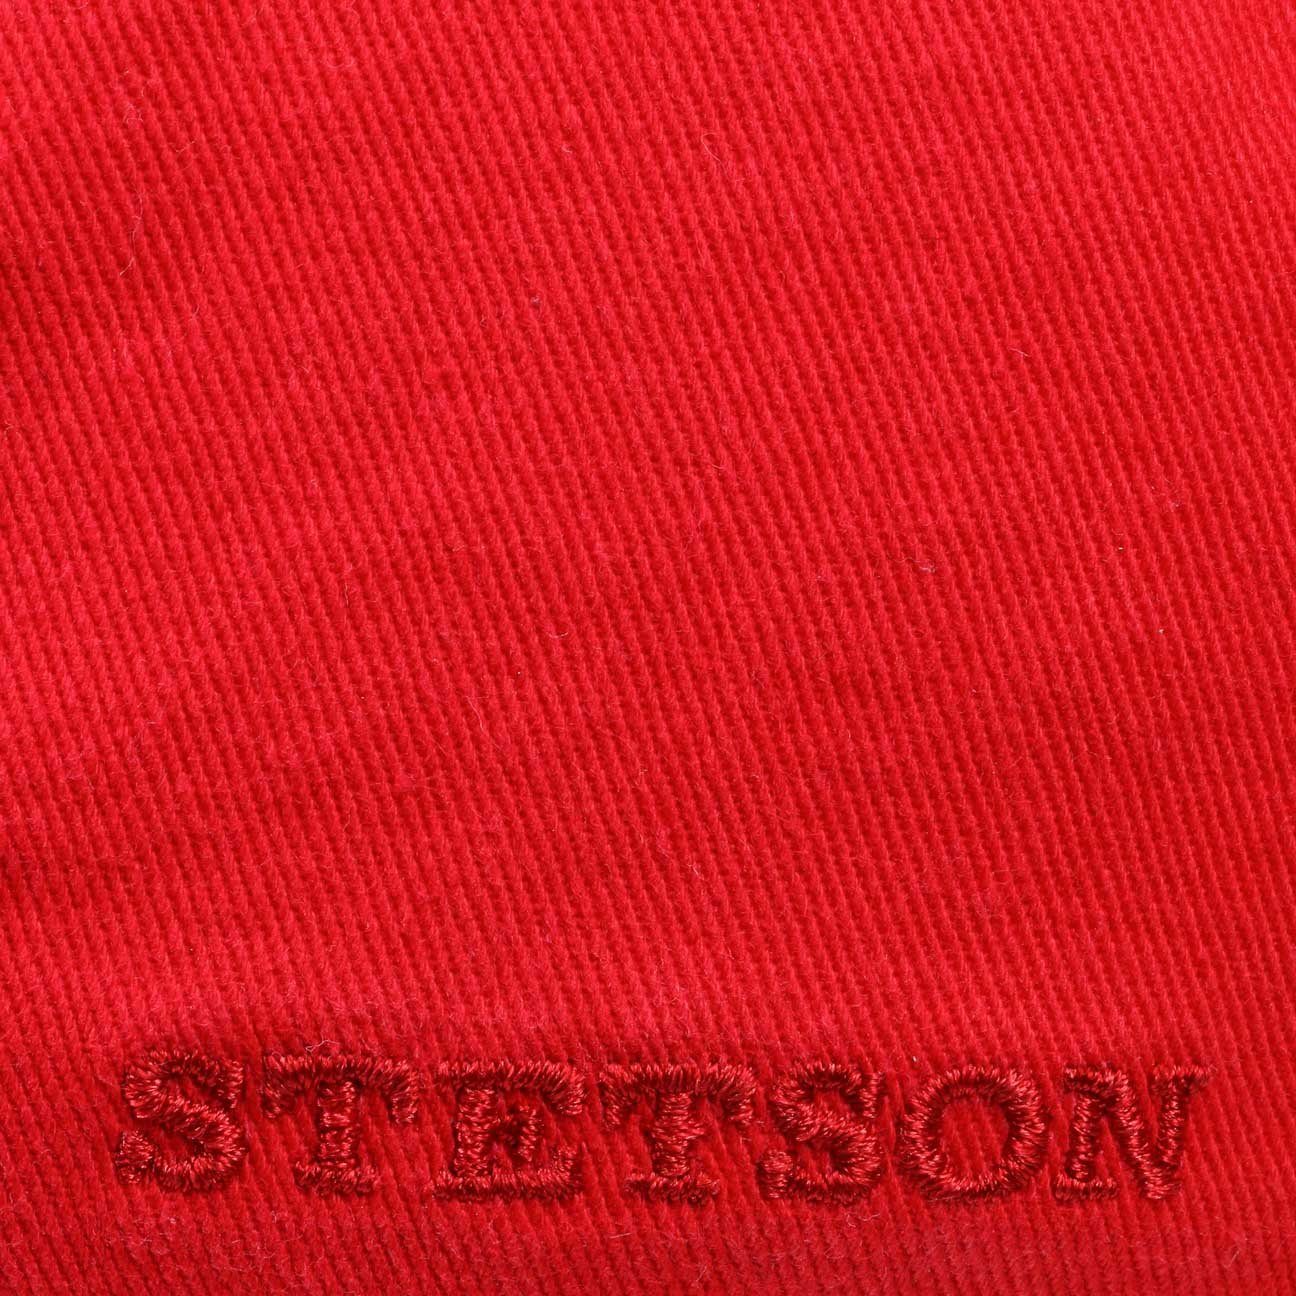 Stetson Baseball Cap (1-St) Basecap rot Metallschnalle